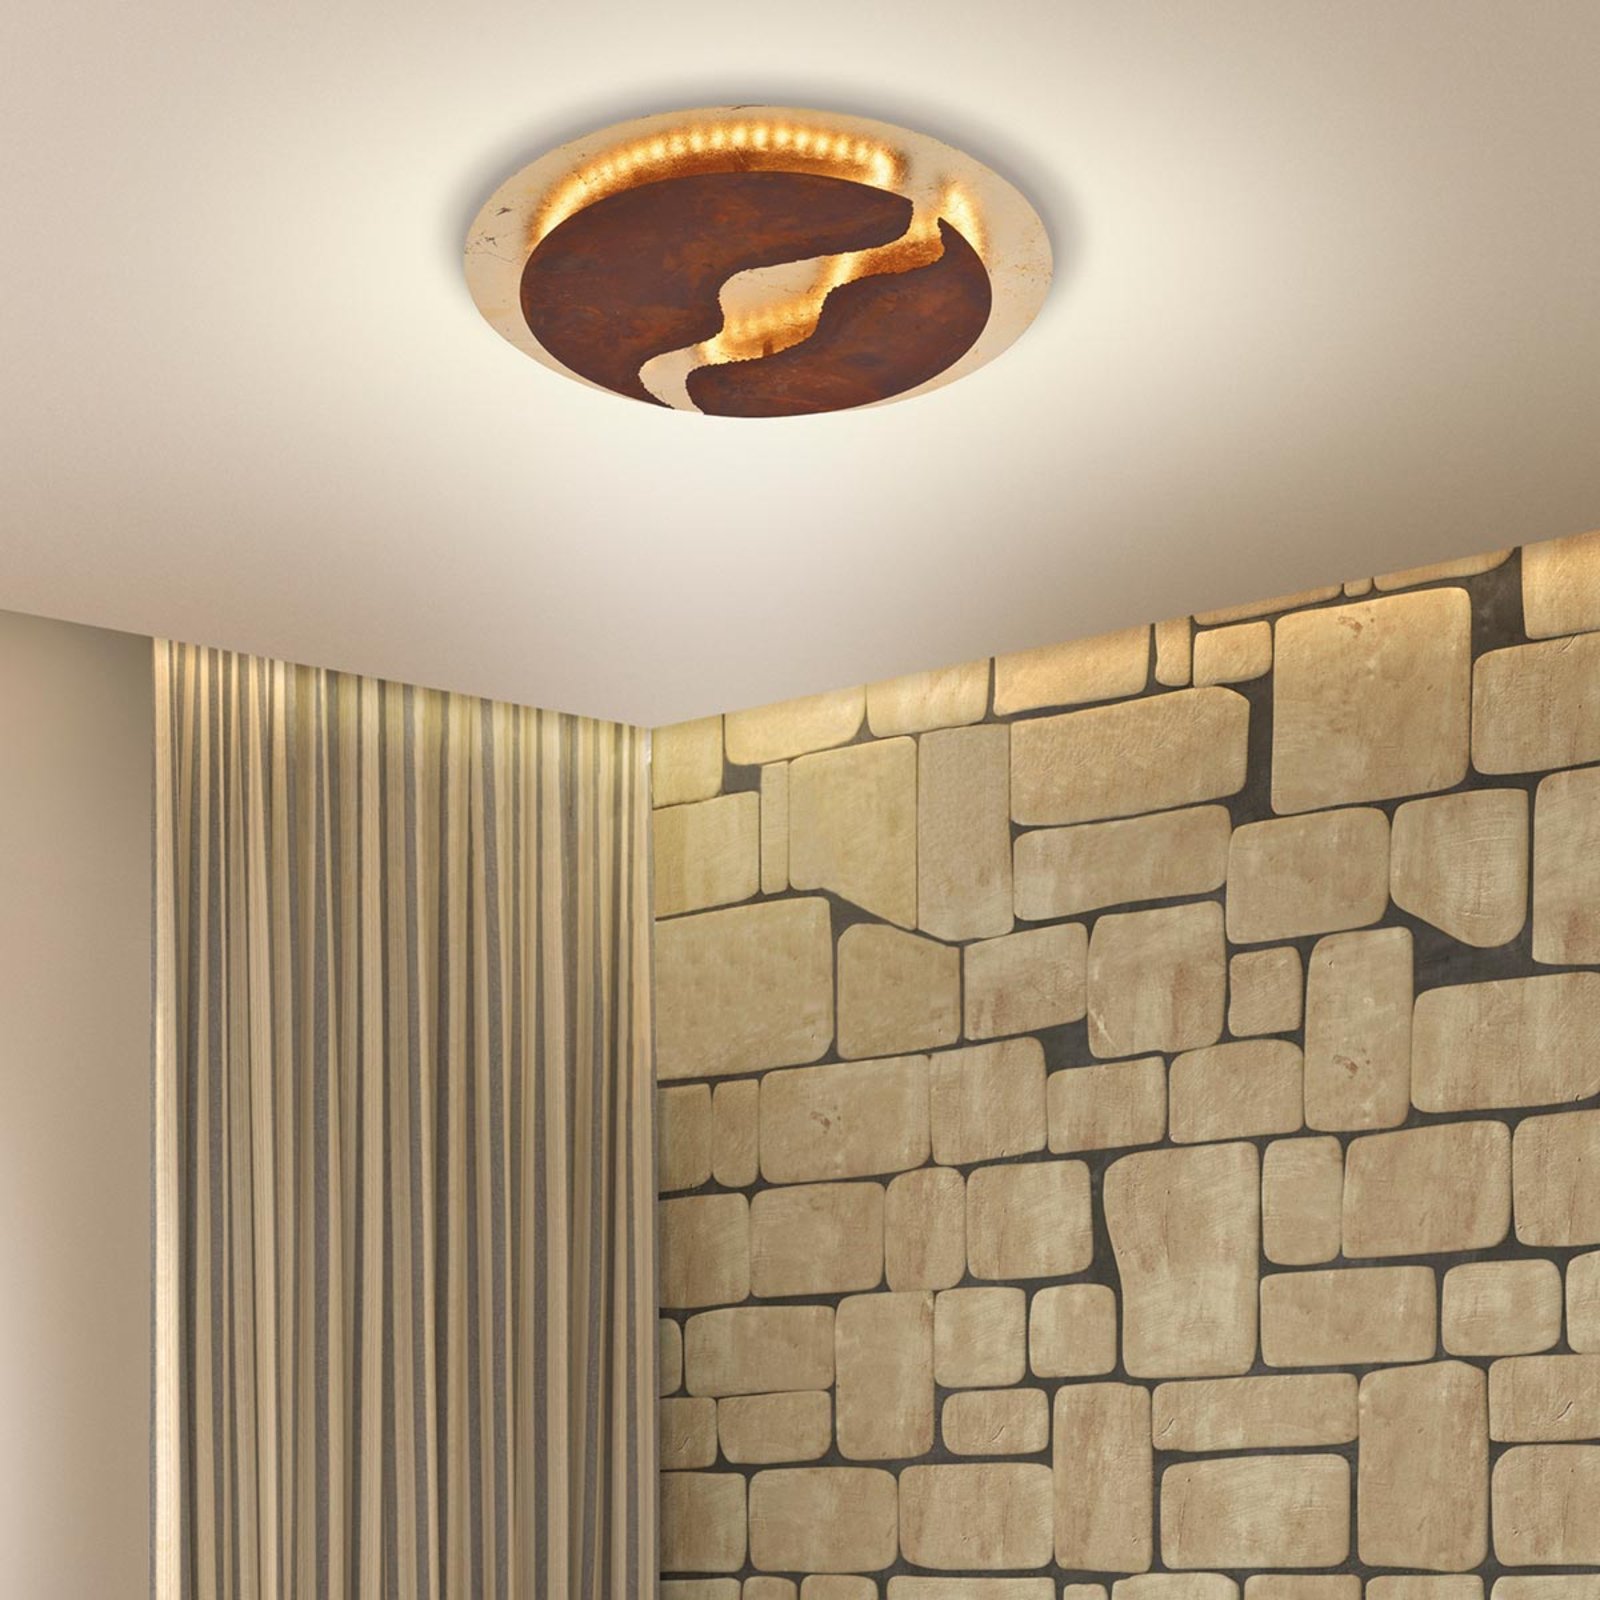 LED-loftlampe Nevis, rund, Ø 50 cm, brun-guld